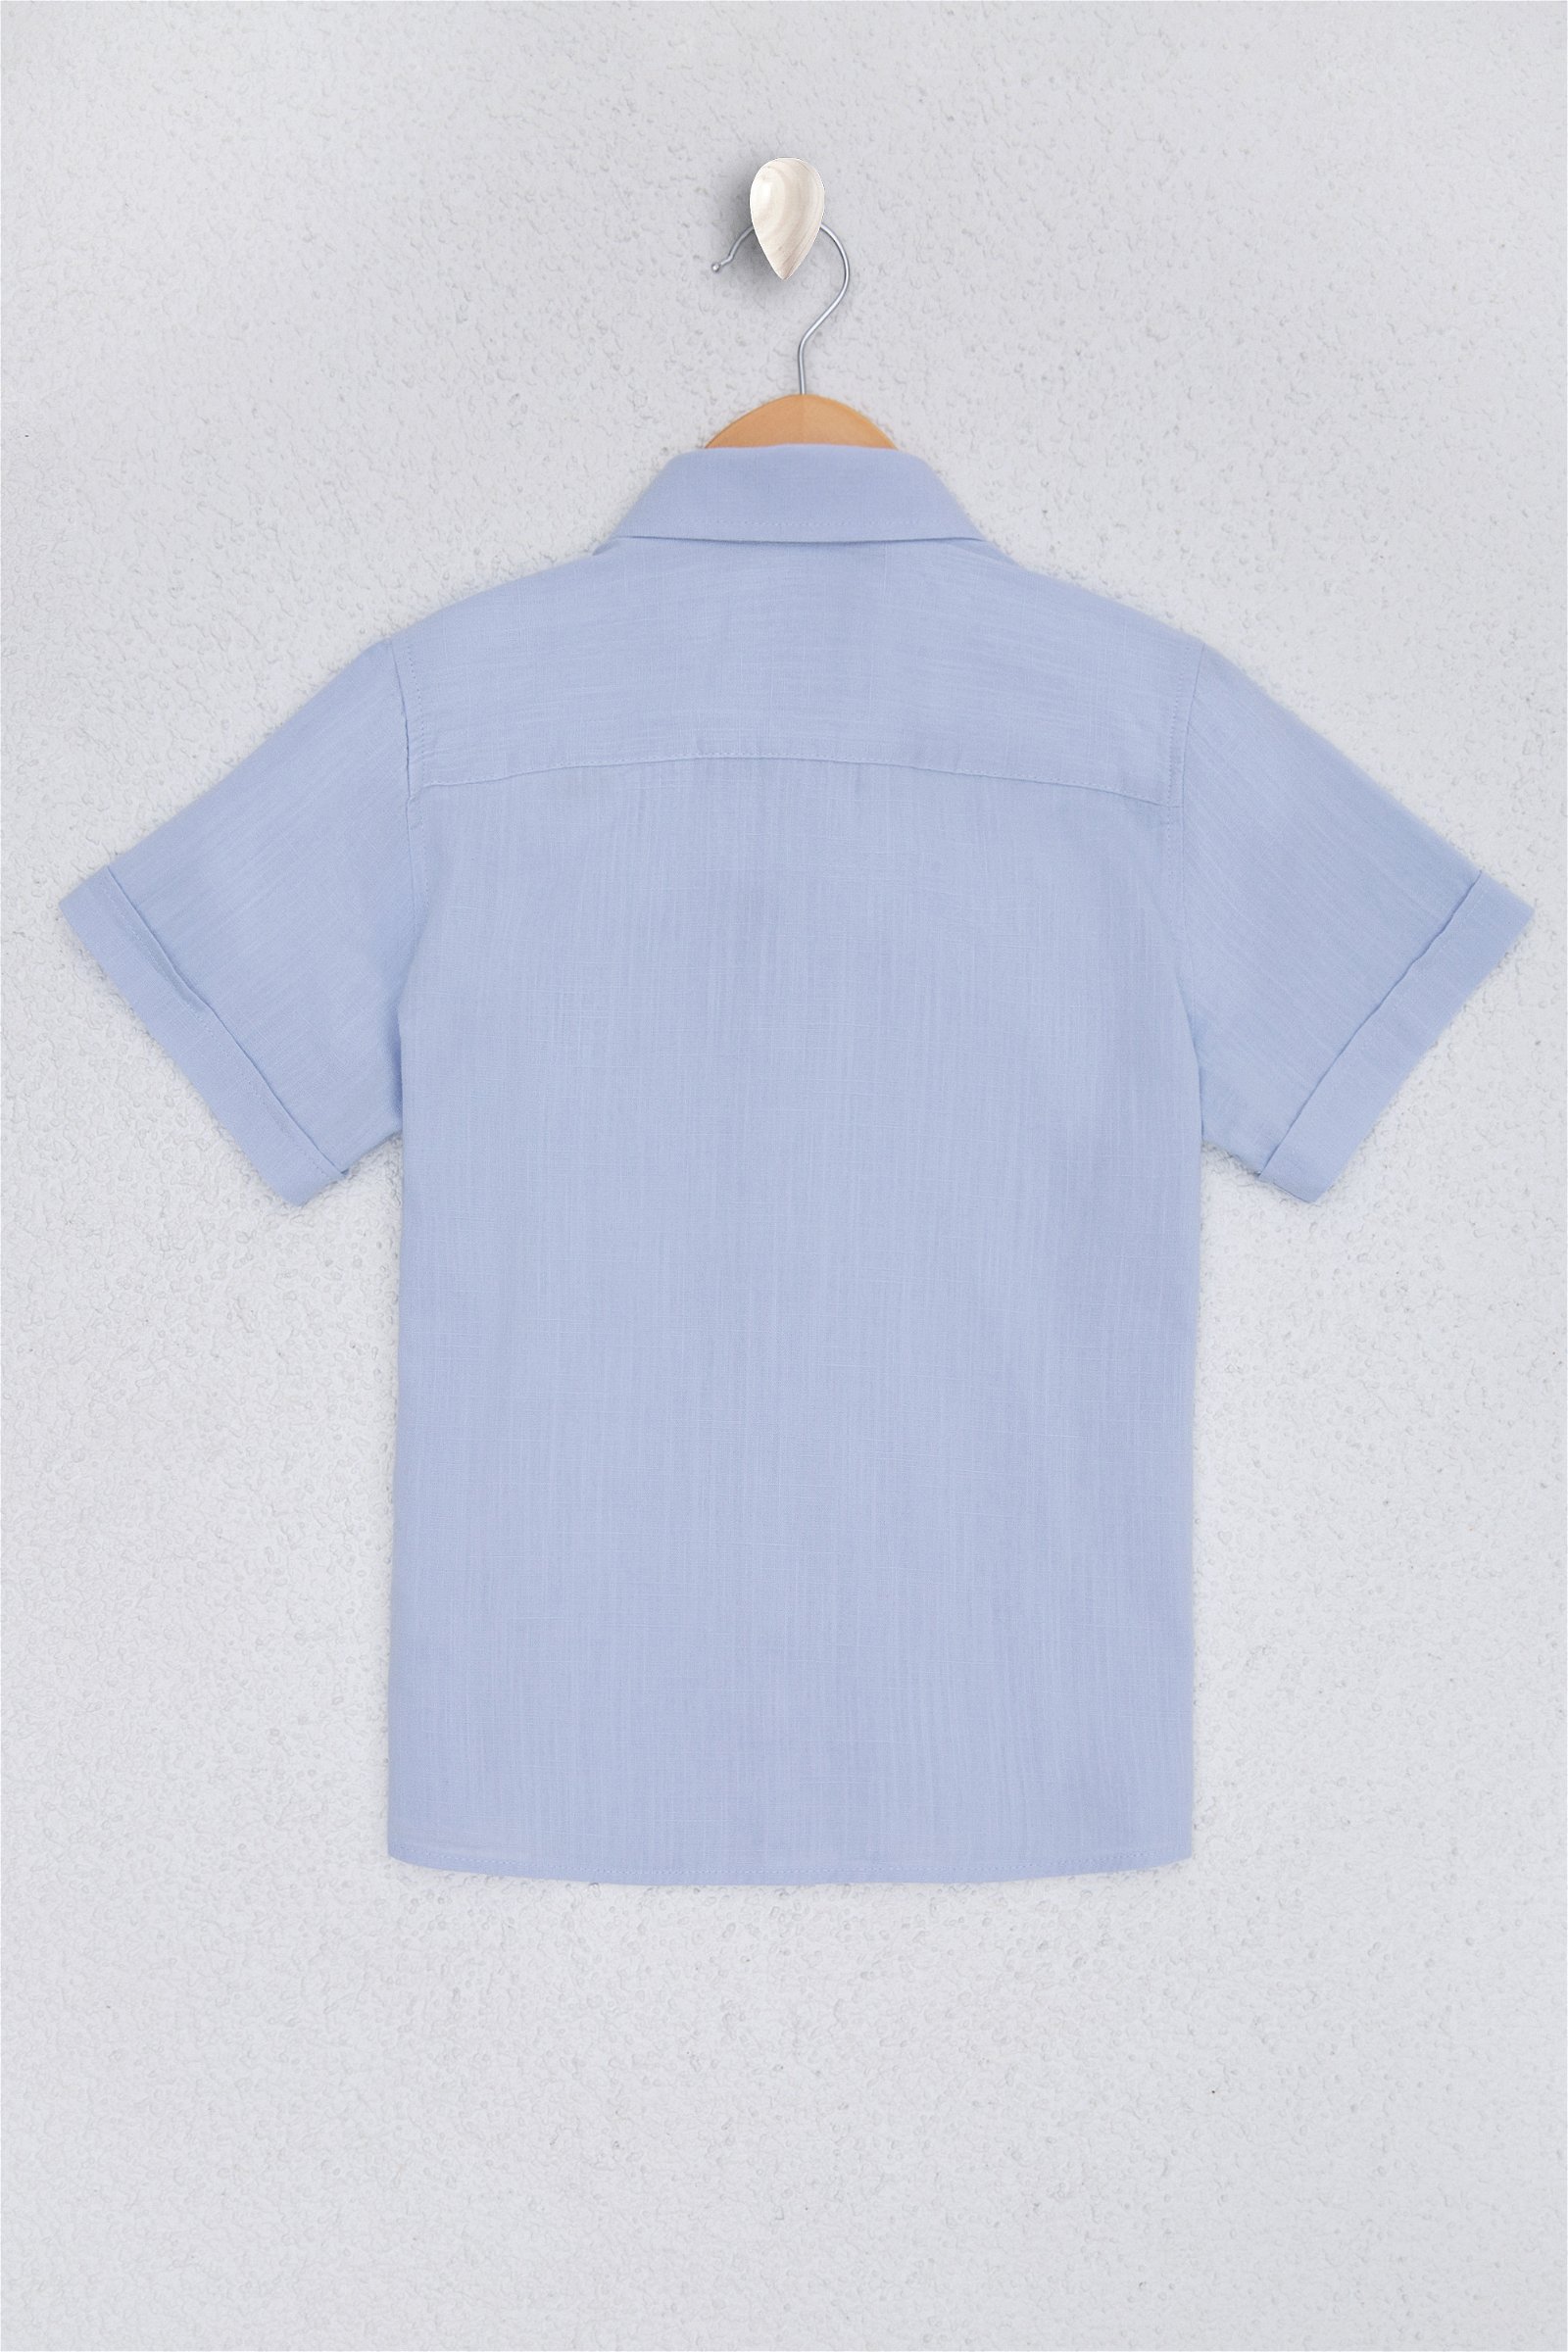 پیراهن  سورمه ای روشن  استاندارد فیت  پسرانه یو اس پولو | US POLO ASSN